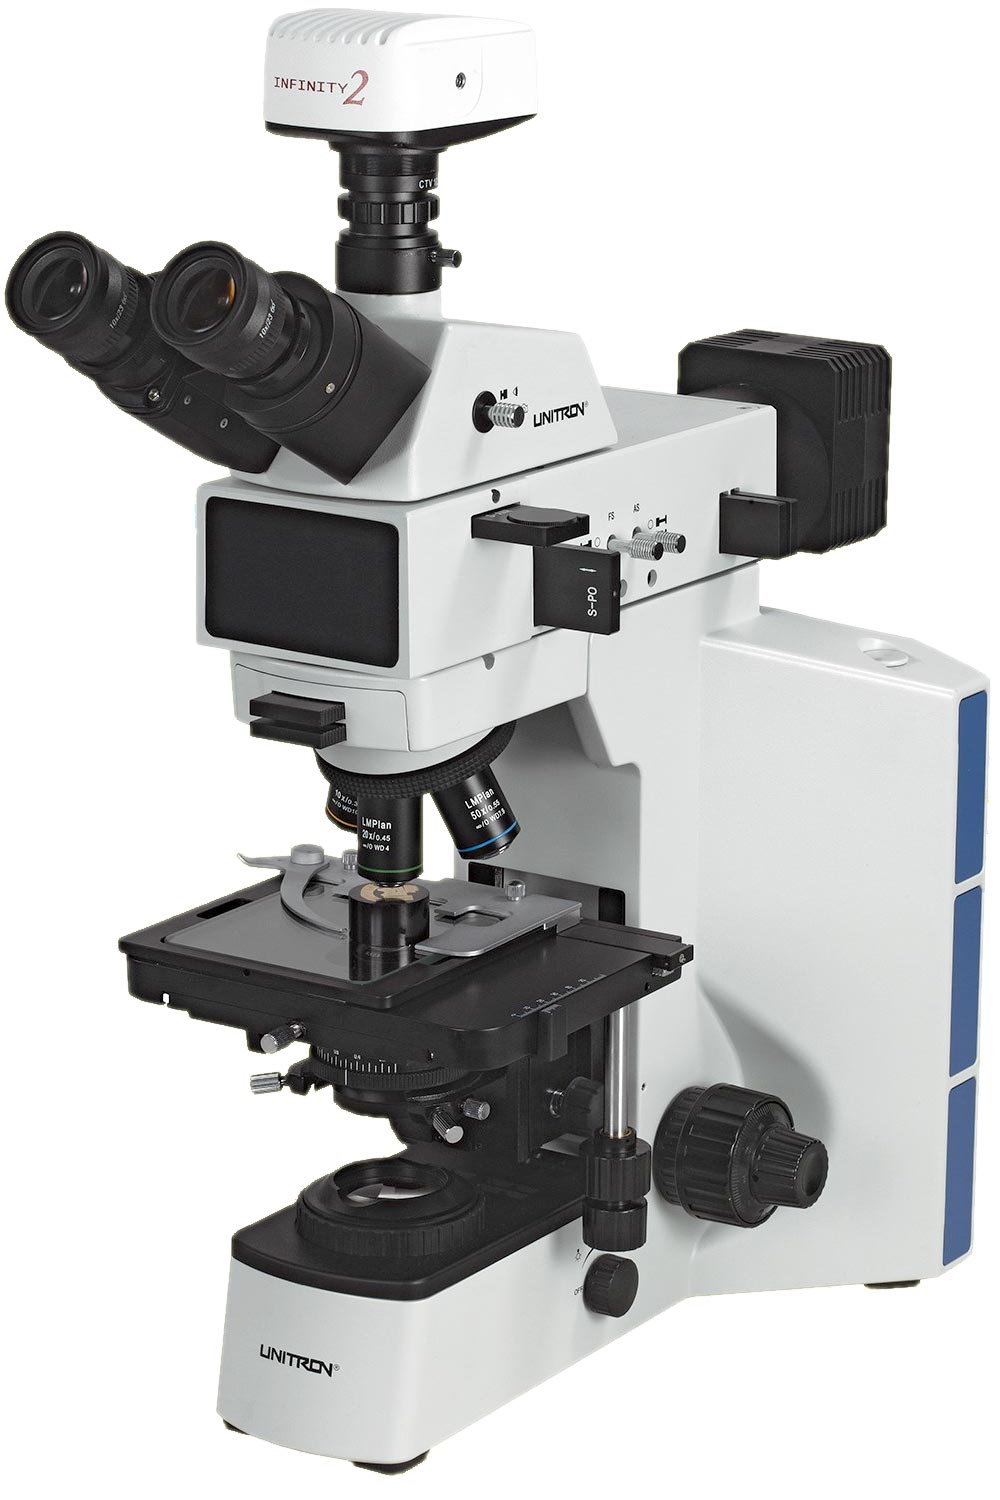 EXAMET-5 Metallurgical Microscope from UNITRON